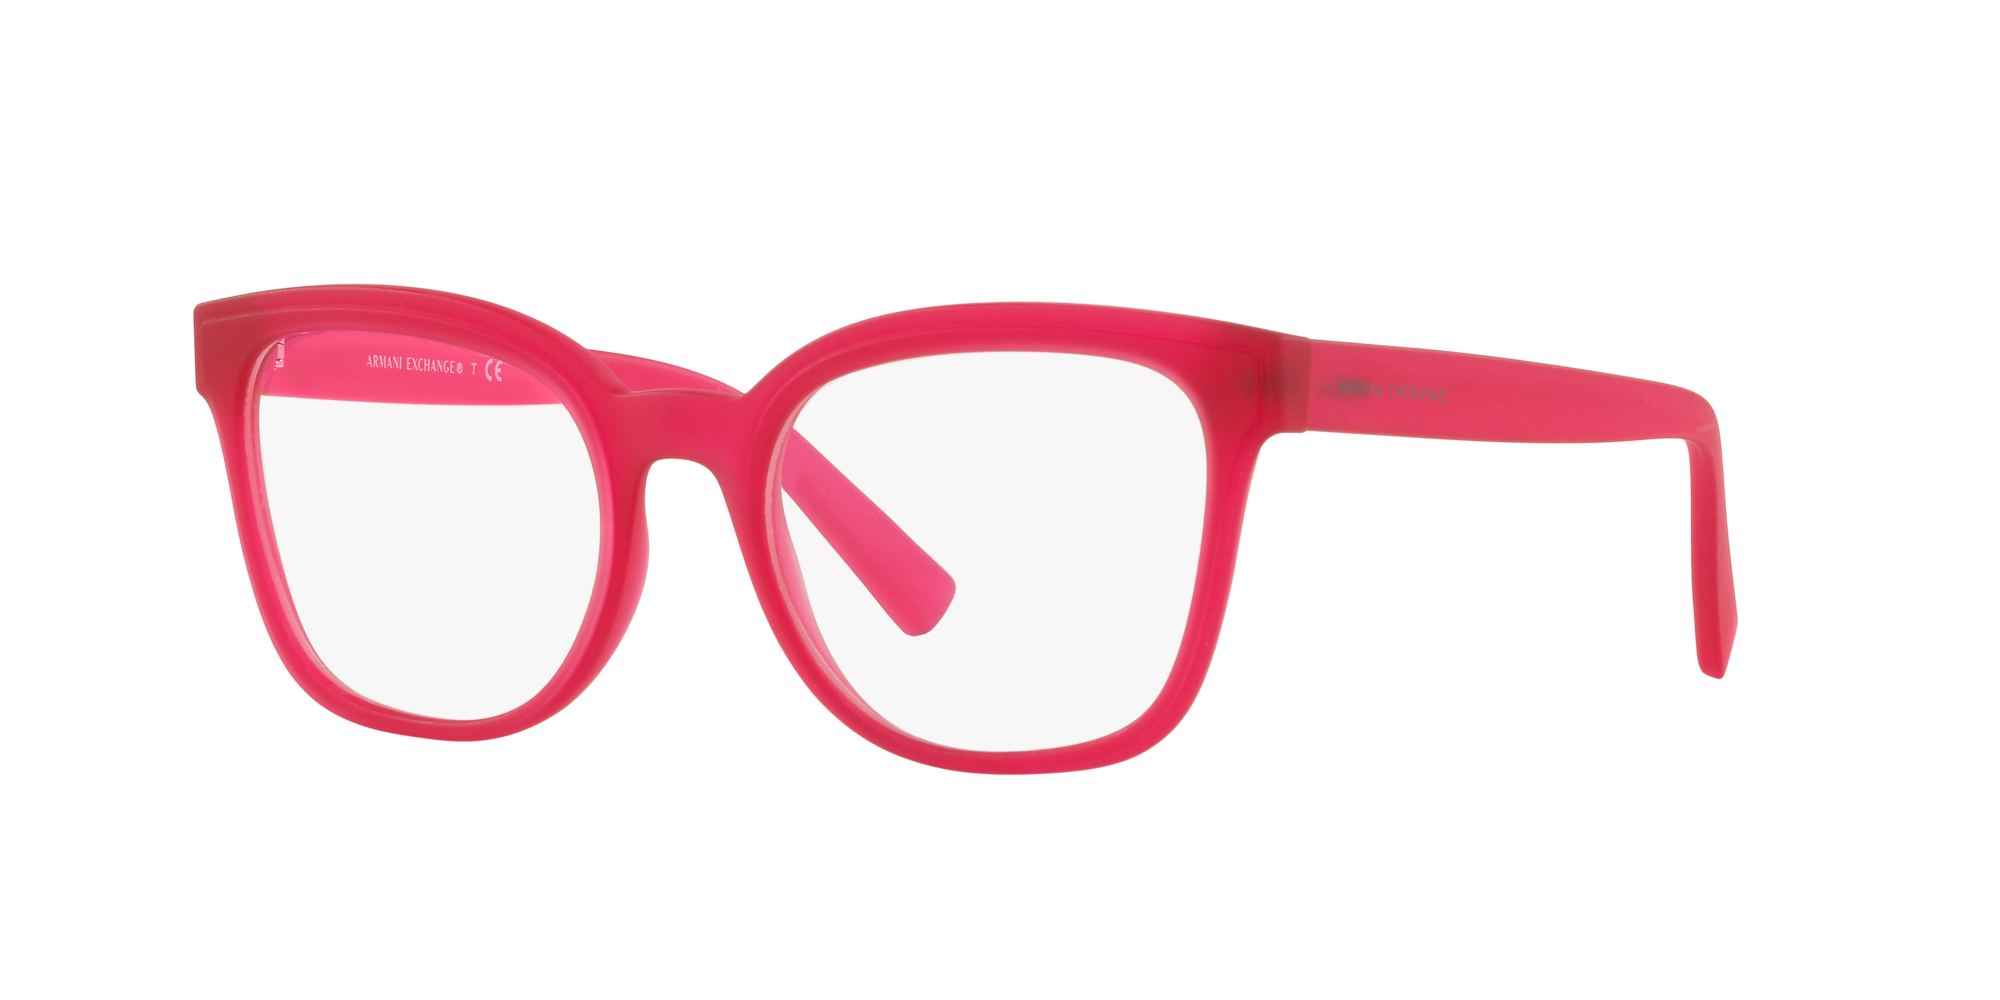 Introducir 95+ imagen armani exchange glasses pink